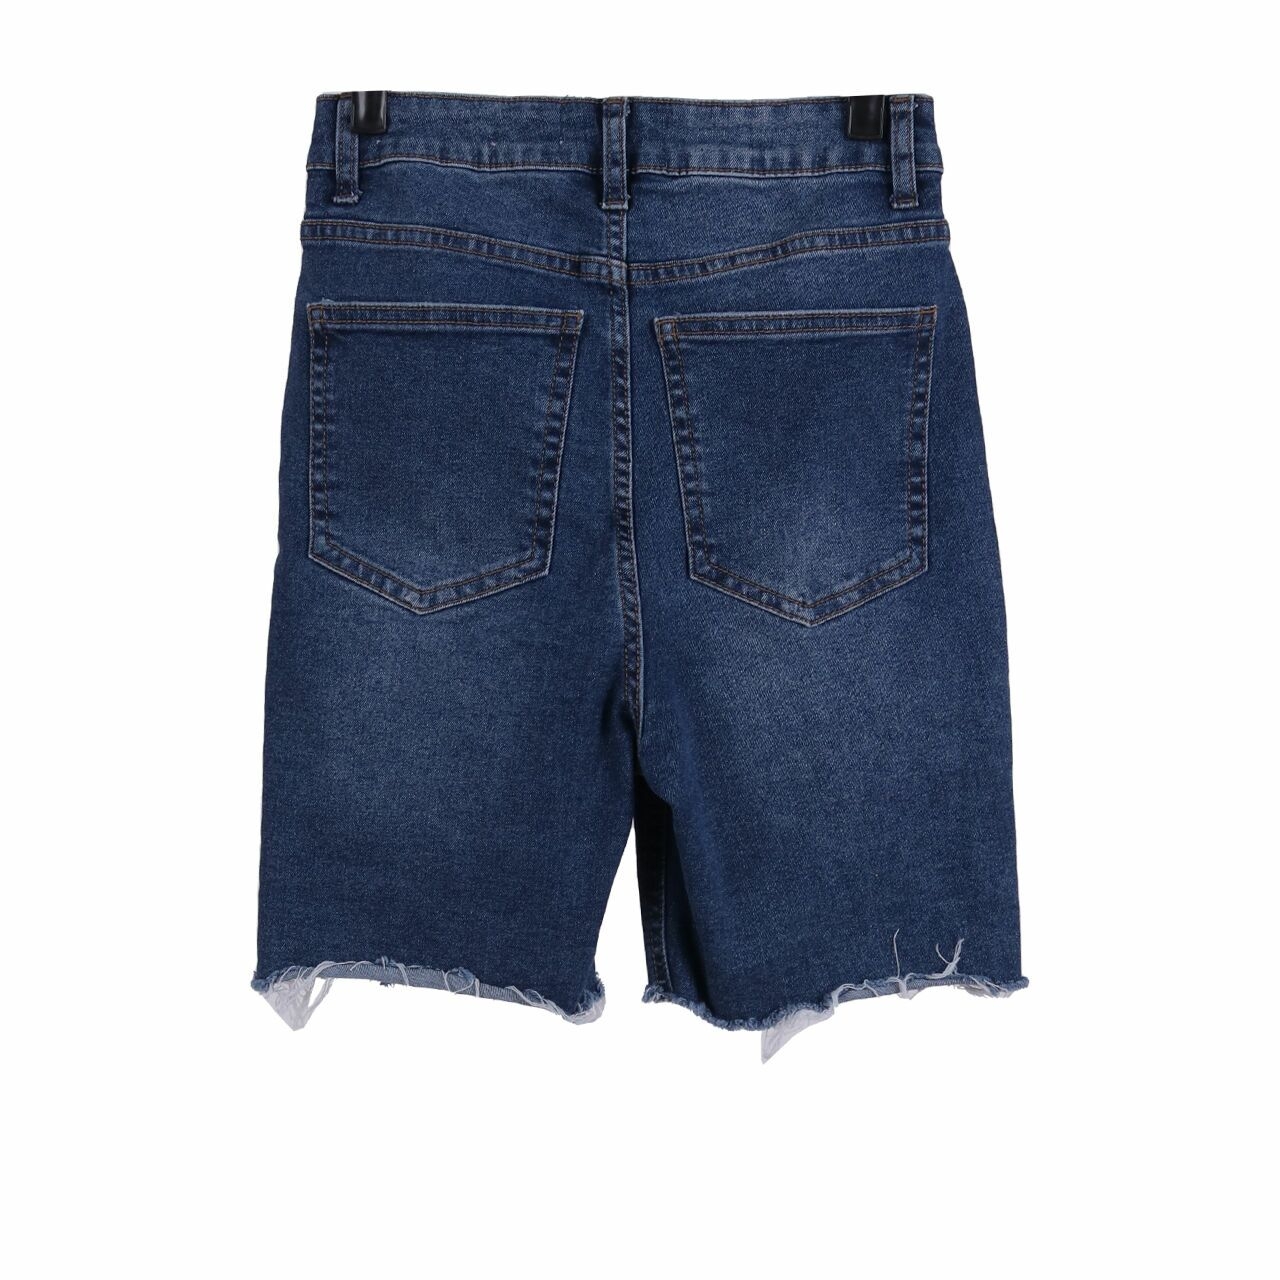 Cotton On Dark Blue Stretch Bermuda Short Pants